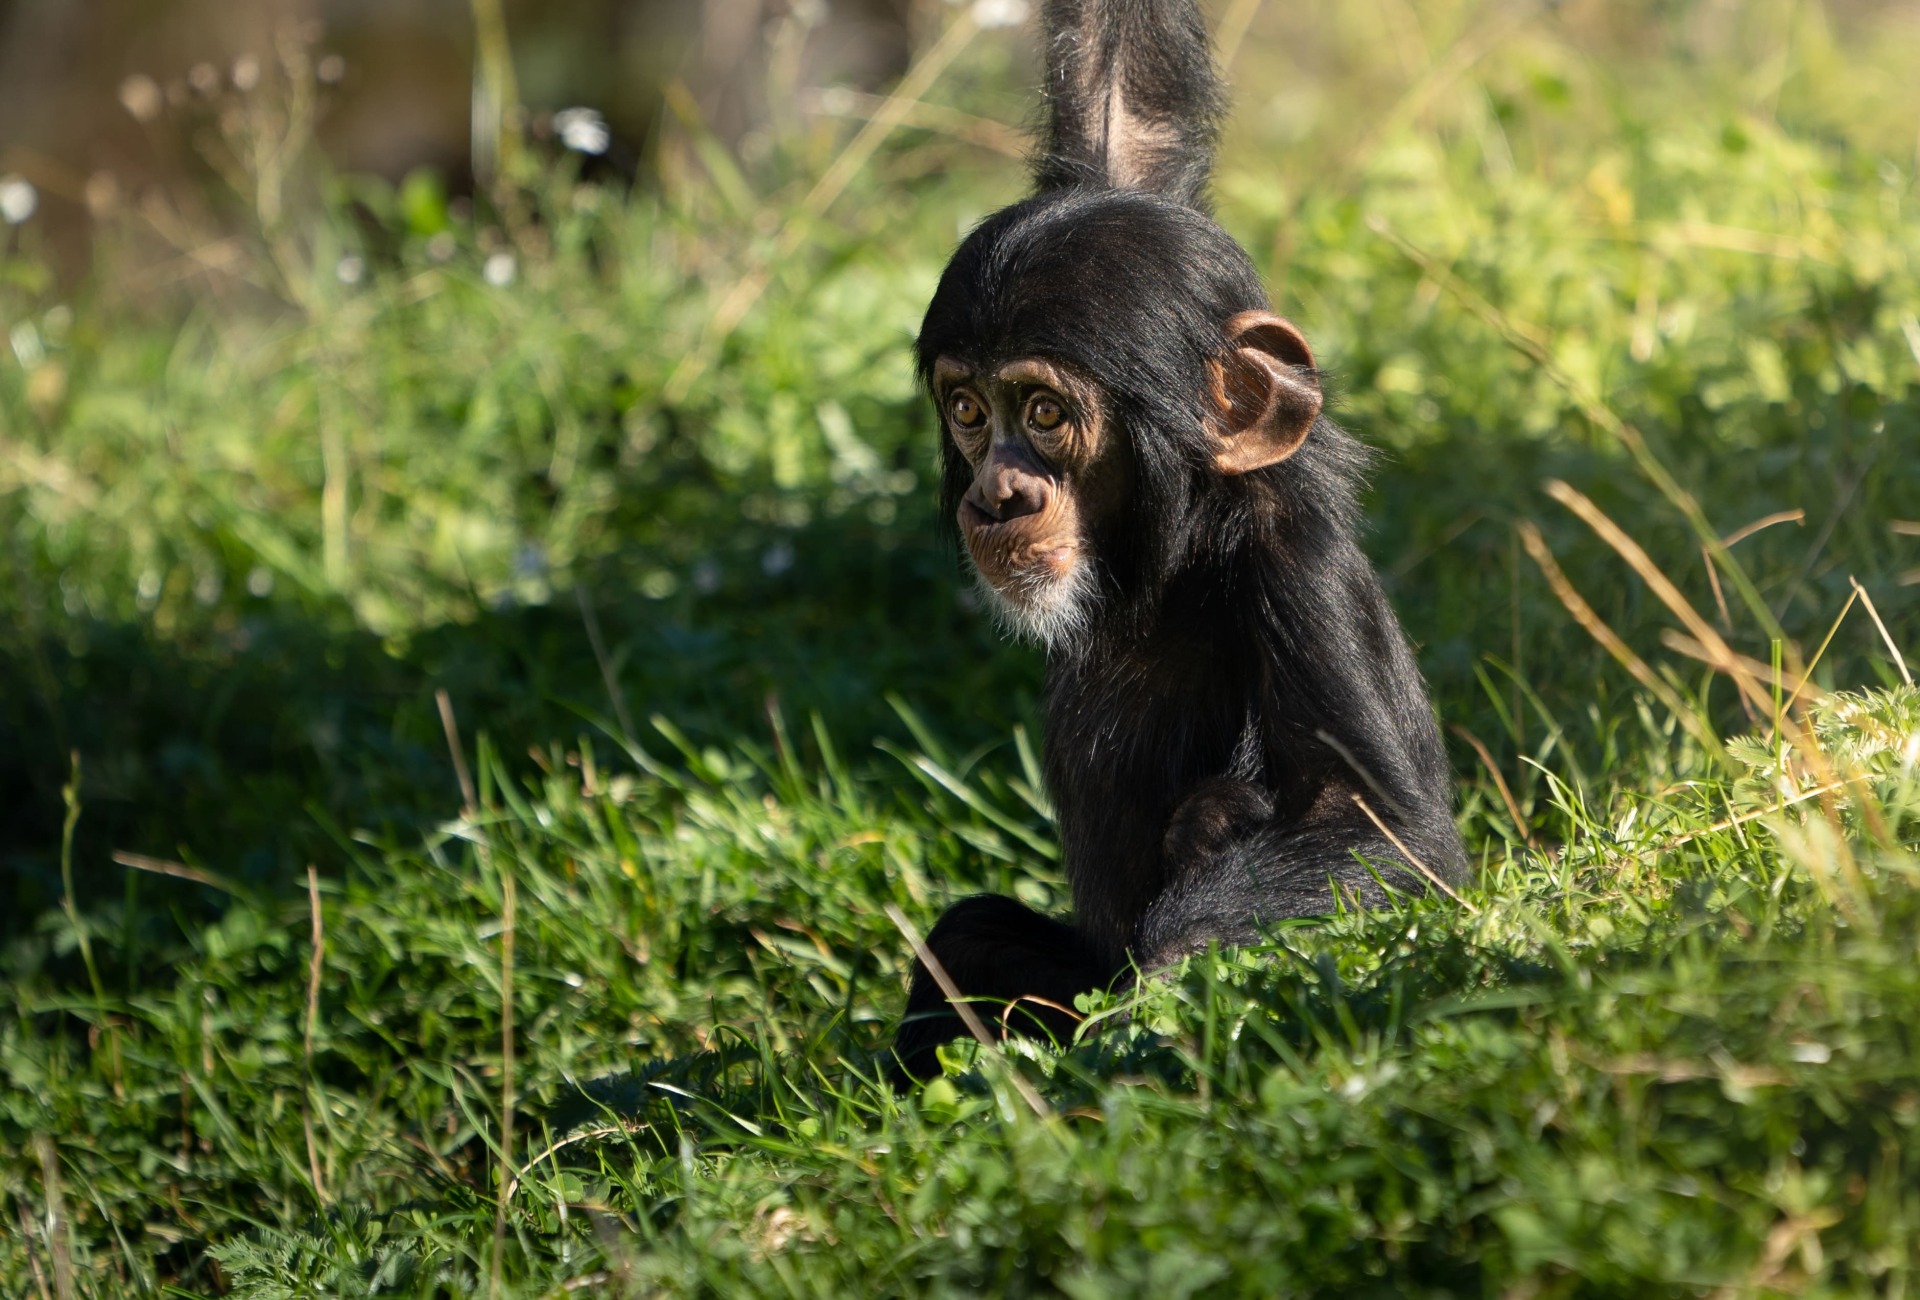 West African Baby Chimpanzee, by Photosybpatrik